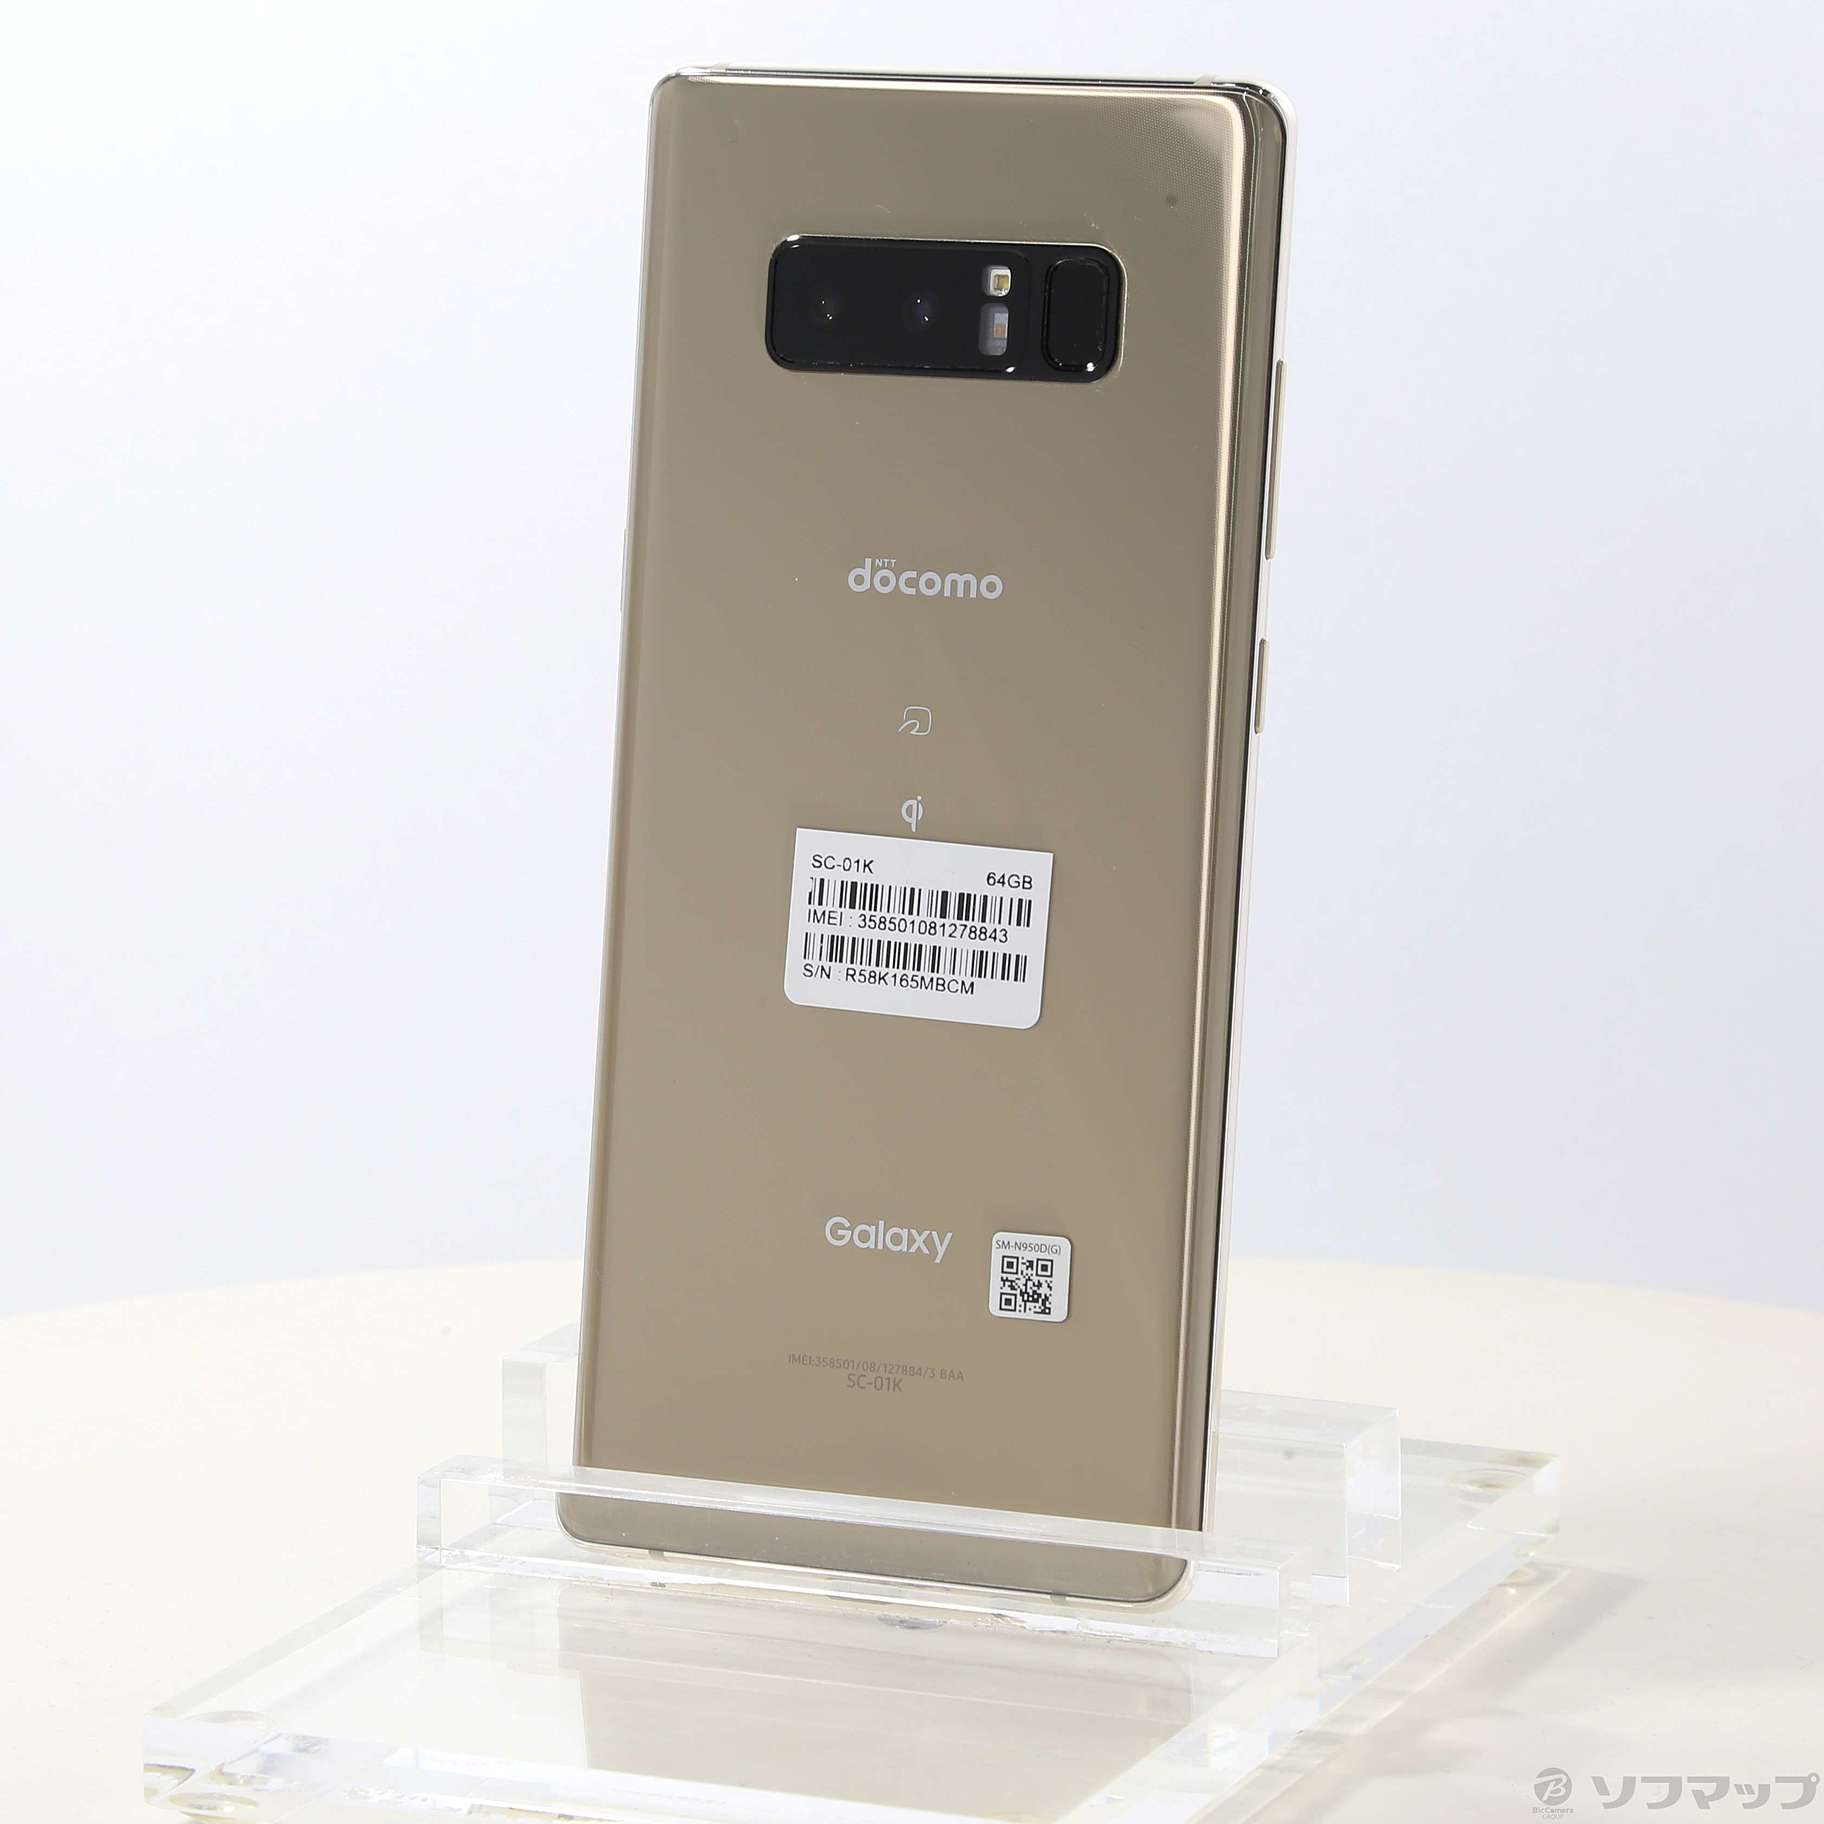 Galaxy Note Gold 64 GB docomo used